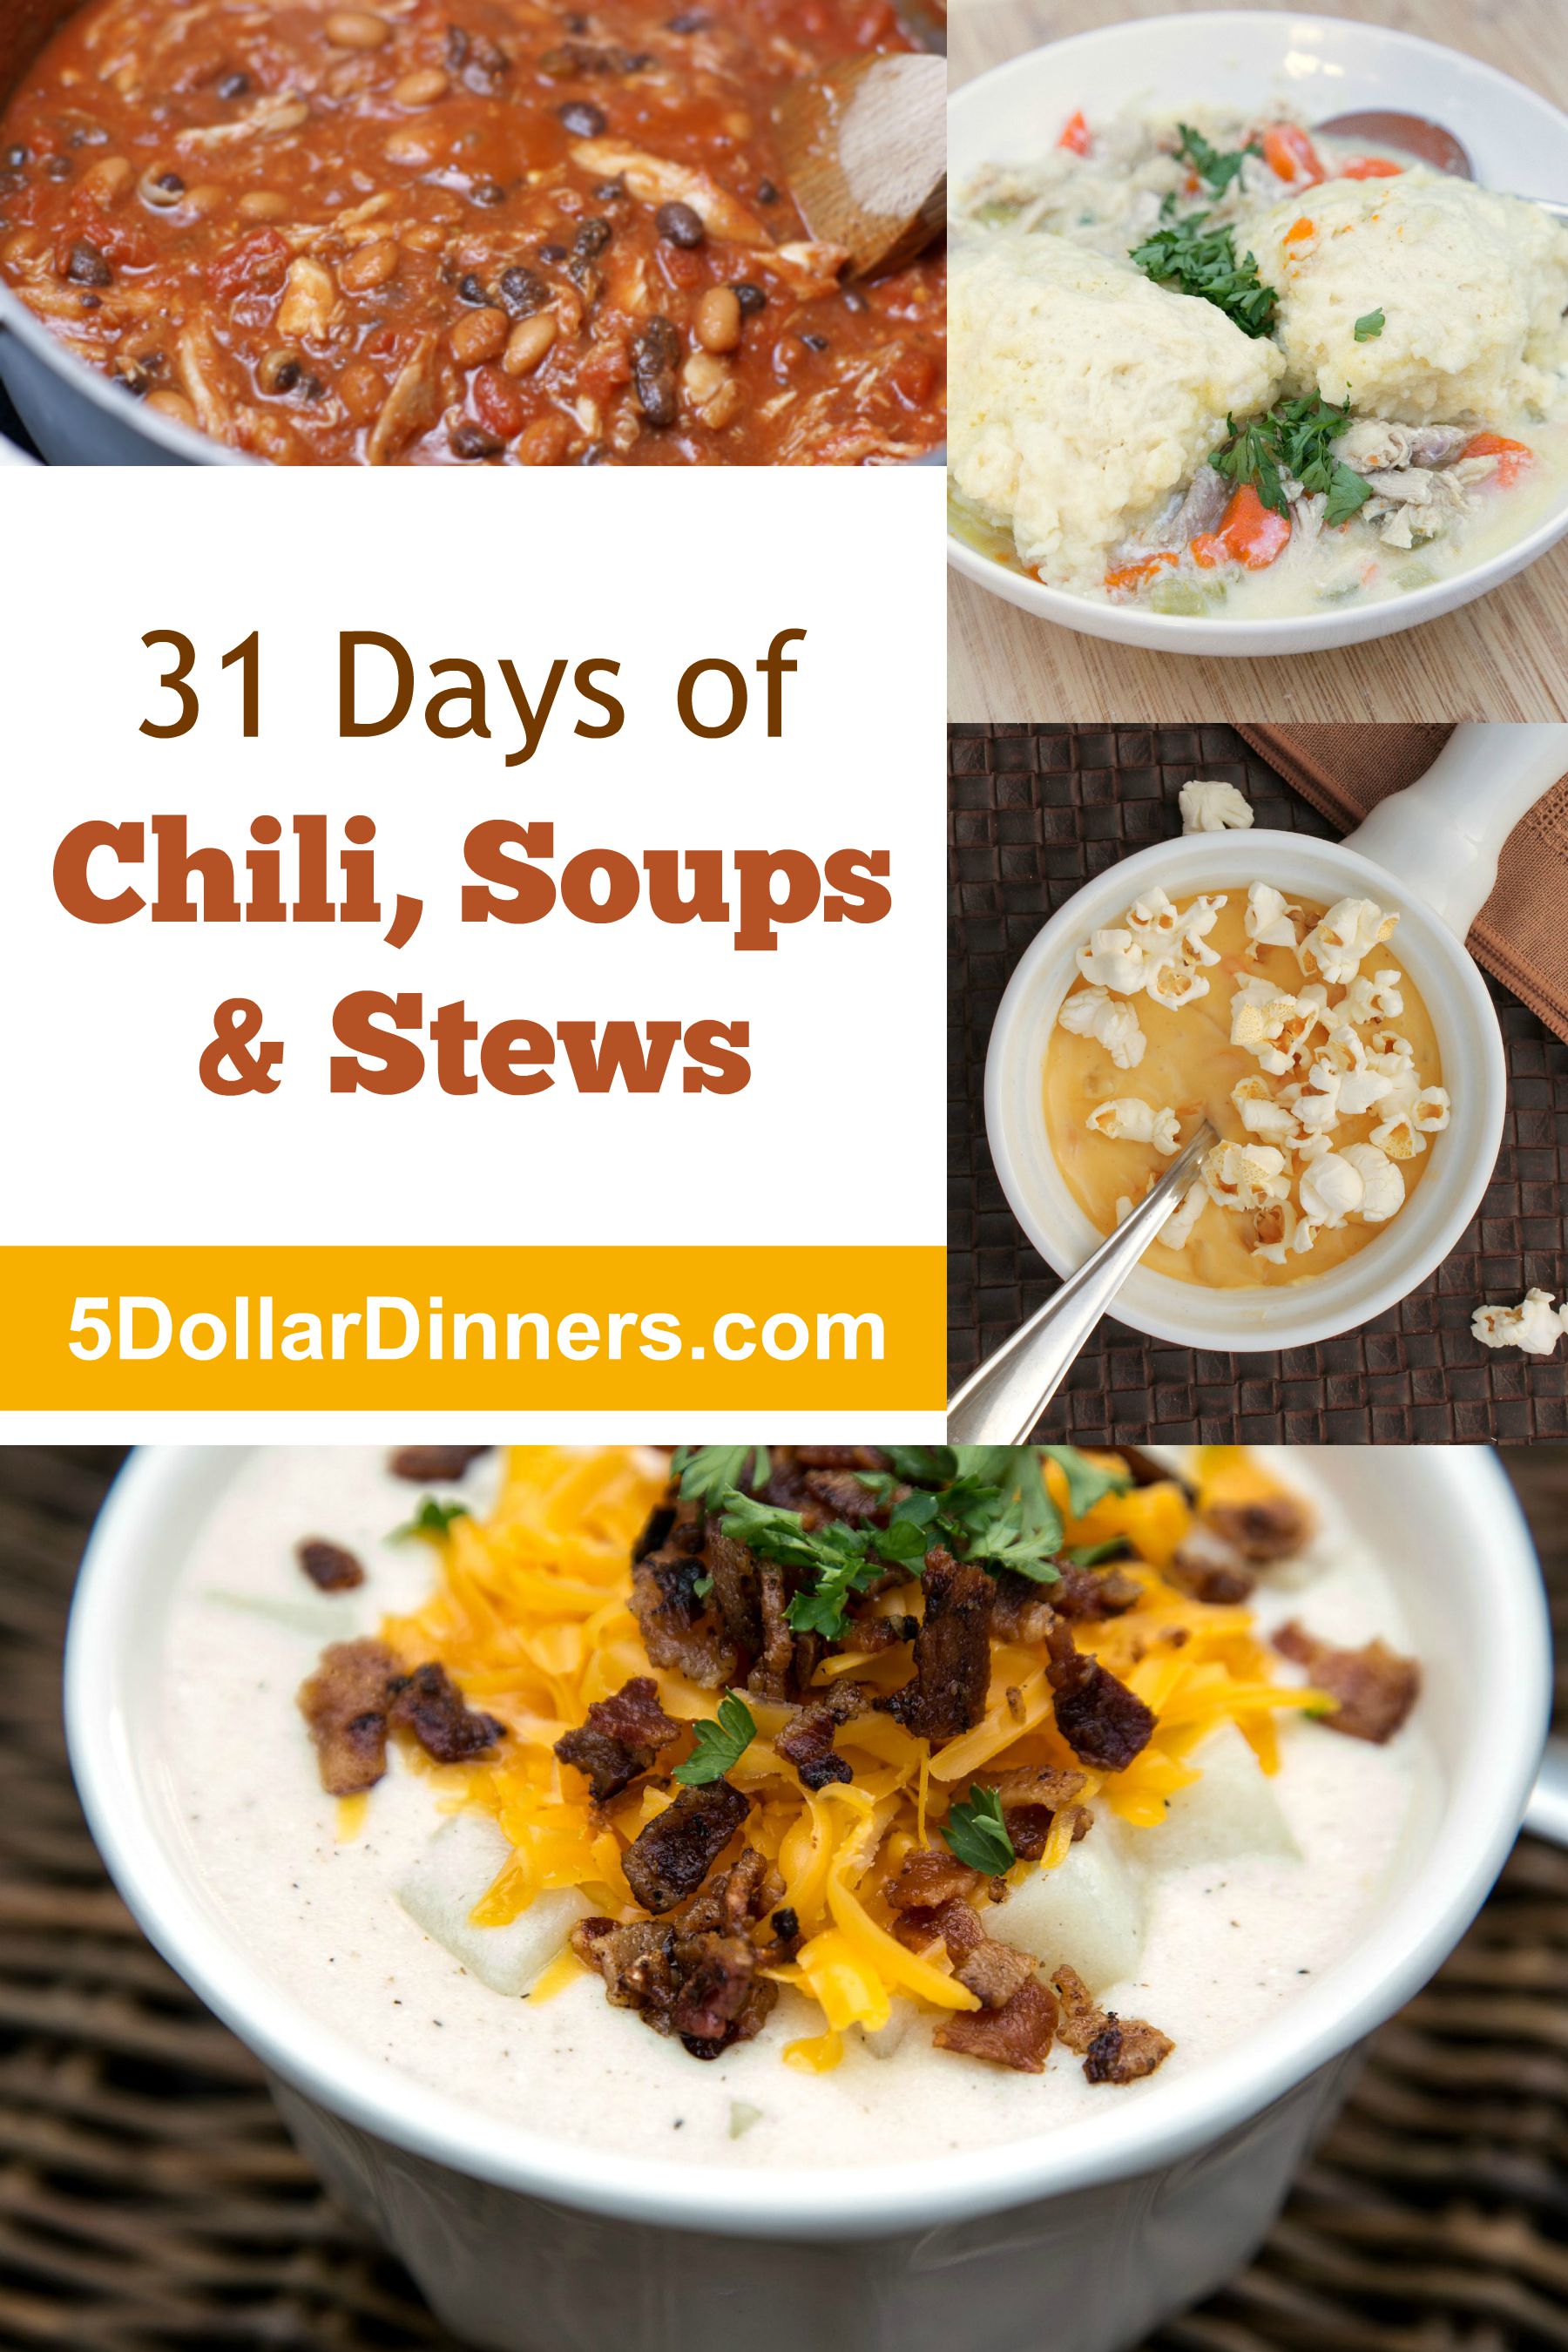 https://www.5dollardinners.com/wp-content/uploads/2015/09/31-Days-of-Chili-Soups-and-Stews-from-5DollarDinners.jpg